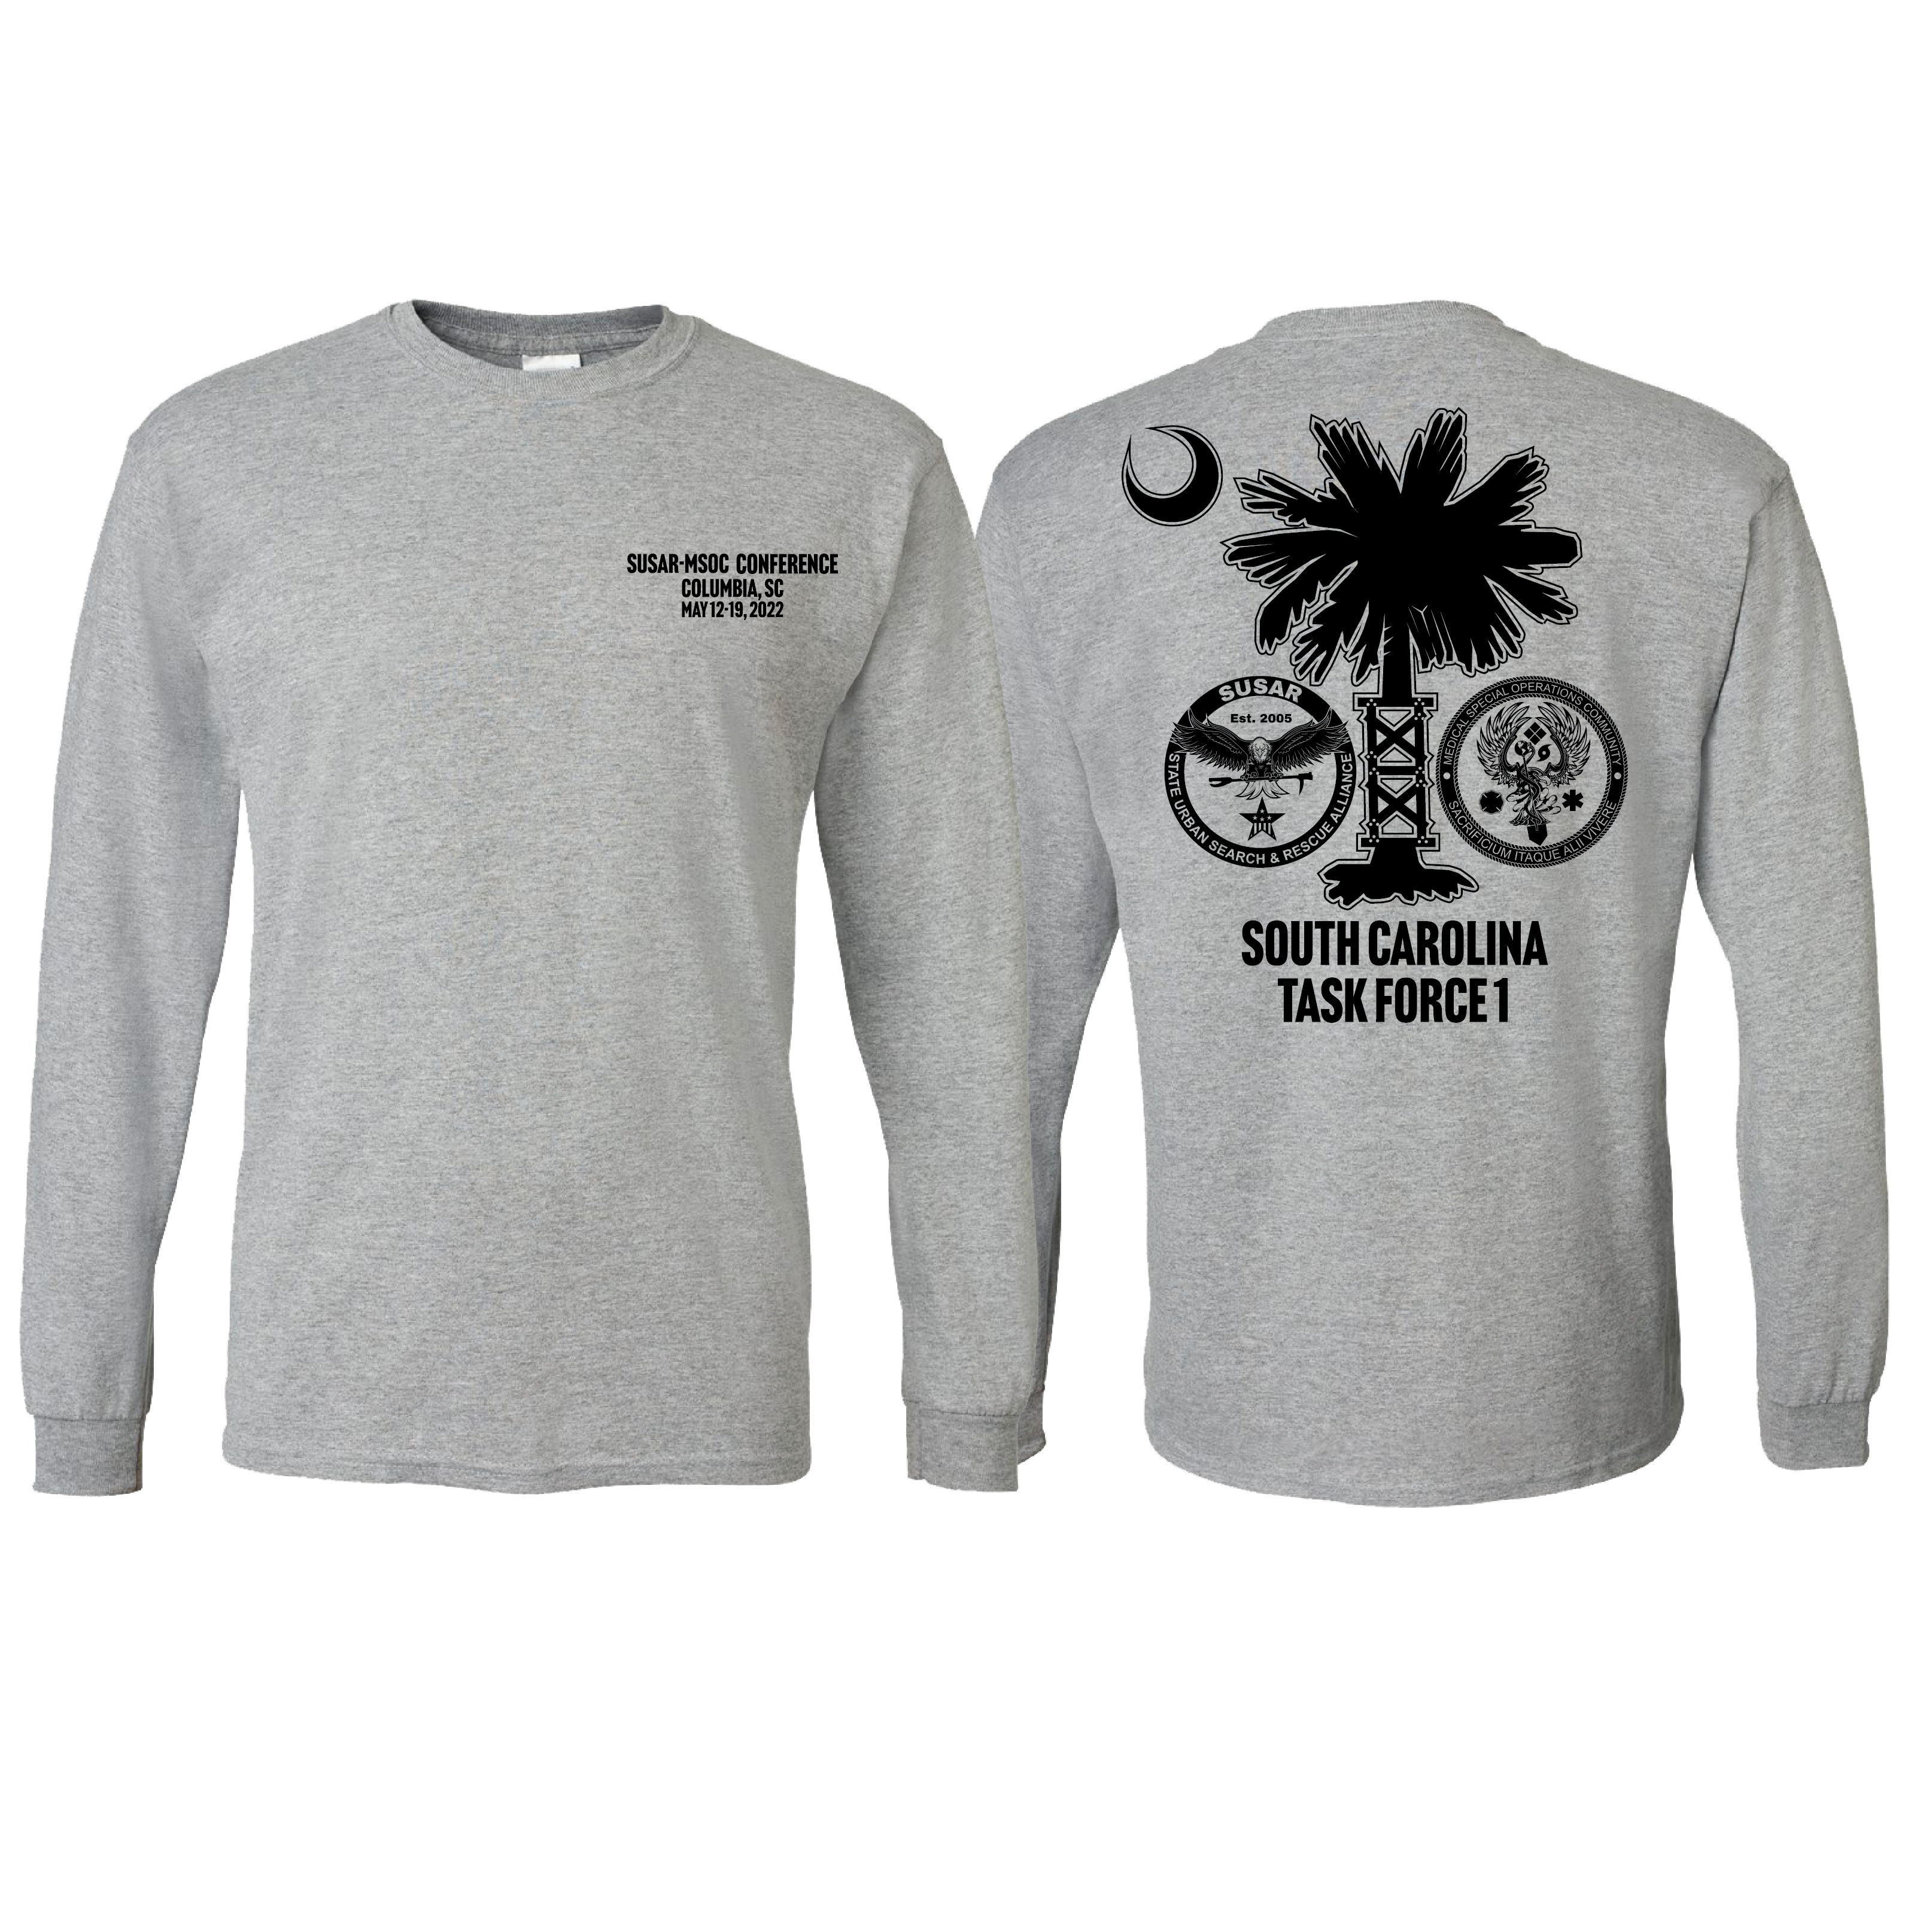 SUSAR 2022 Conference 50/50 Blend L/S T-Shirt - Sport Grey